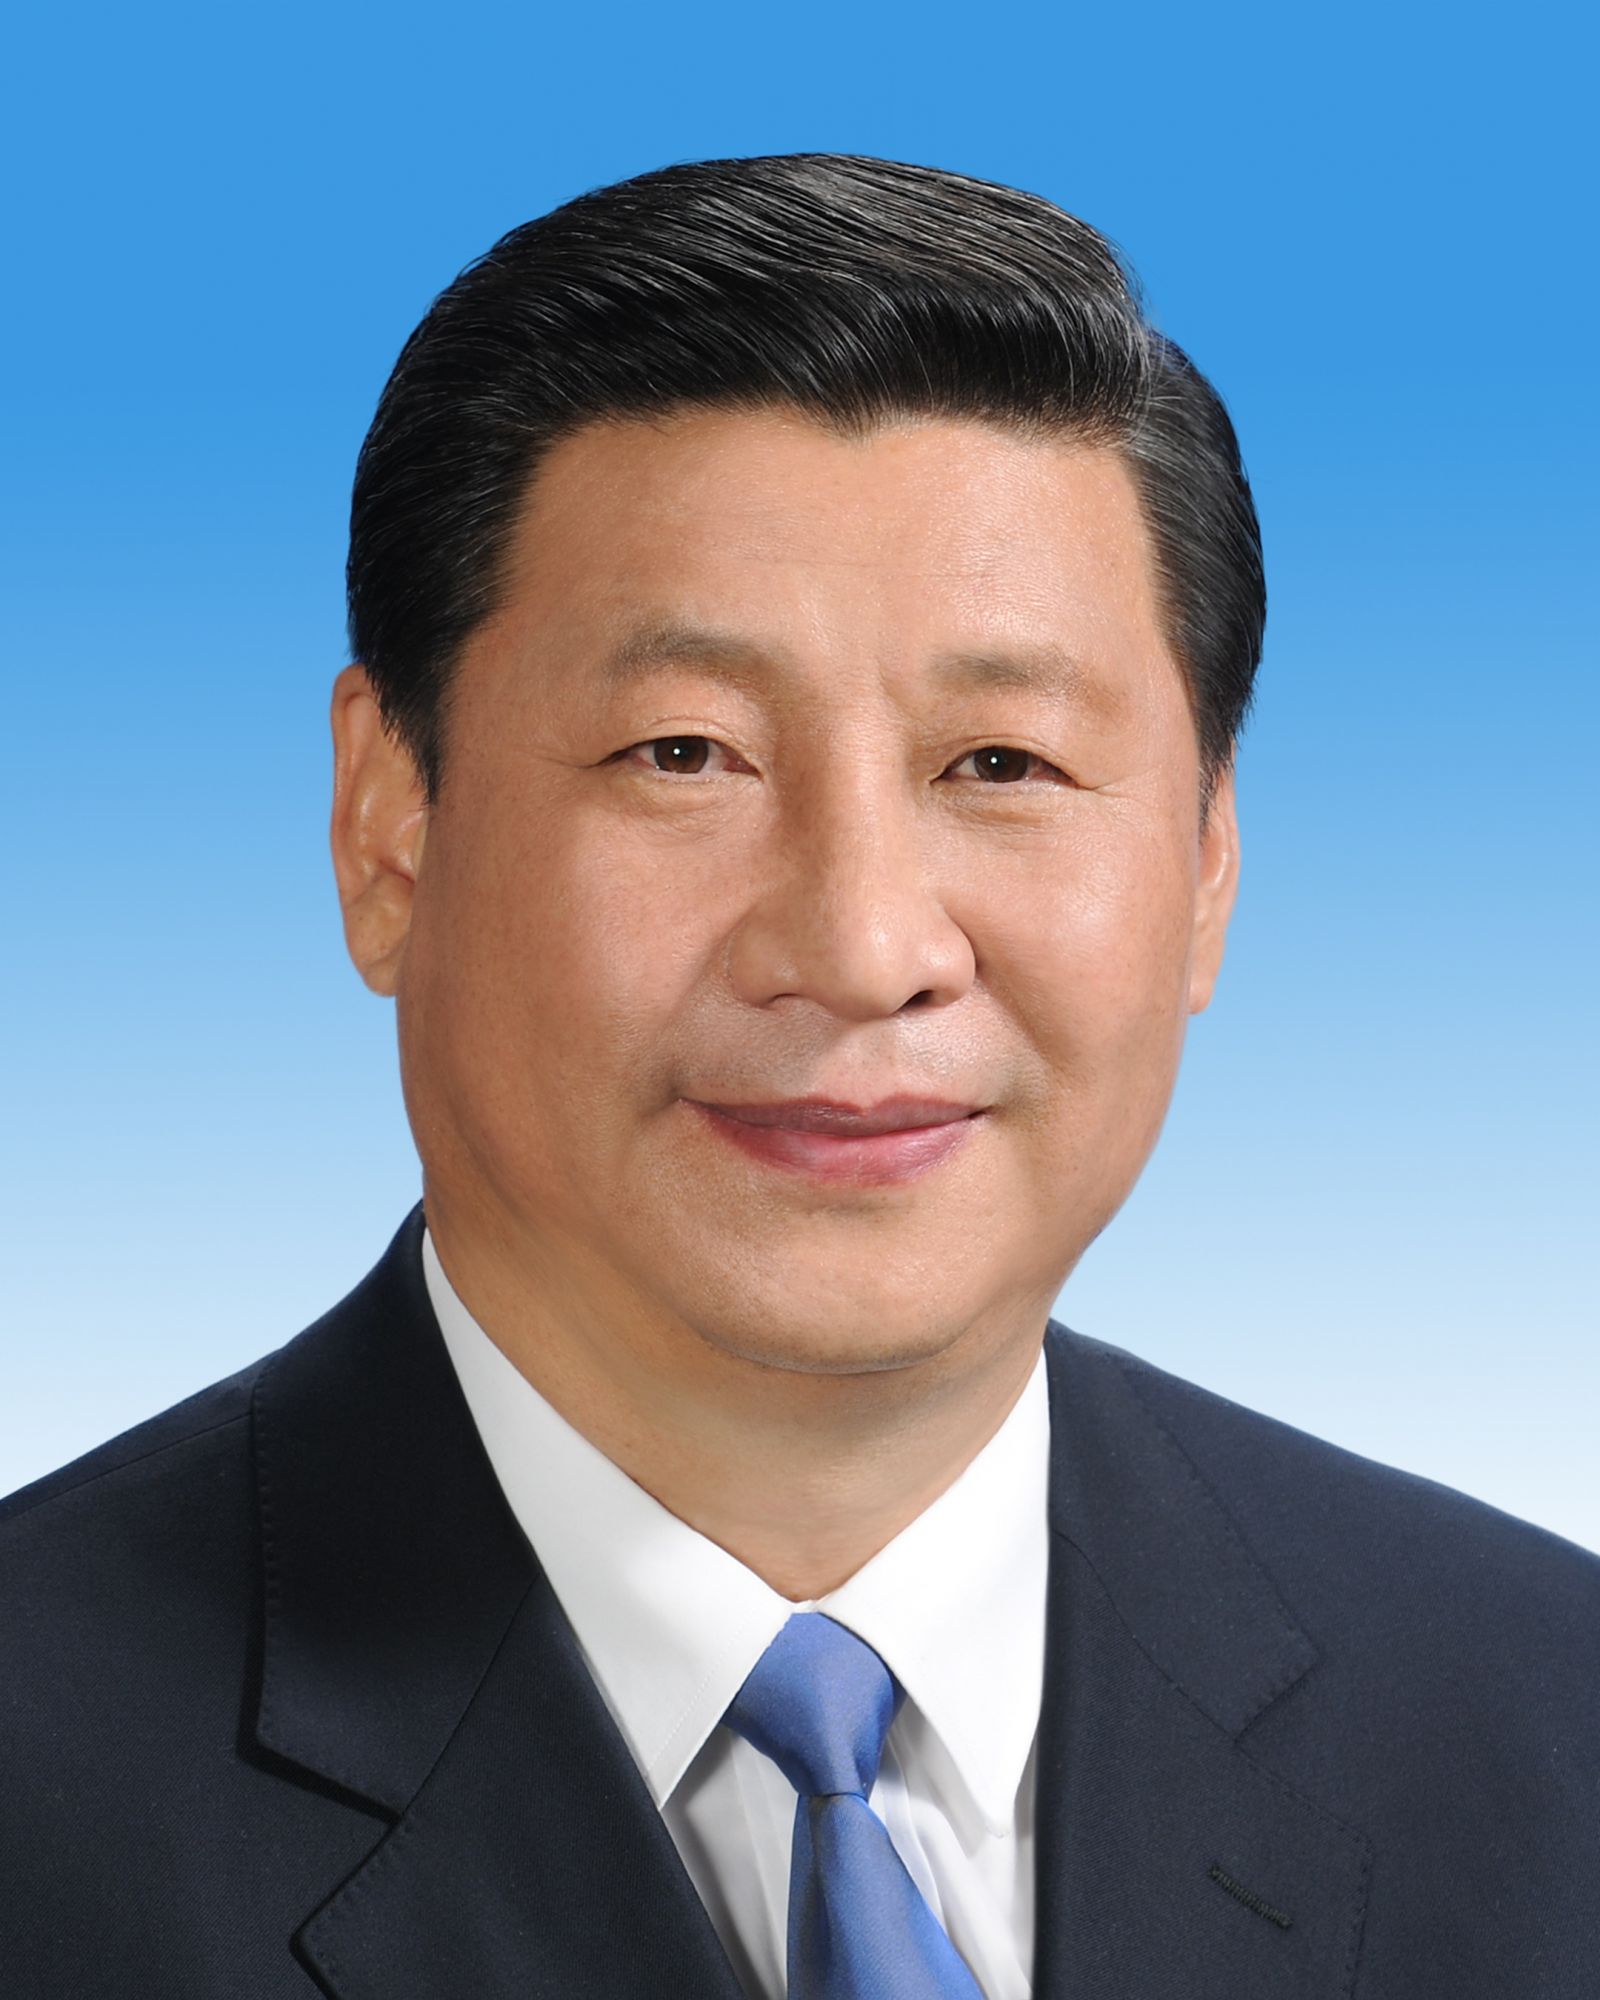 Xi Jinping portrait.jpeg